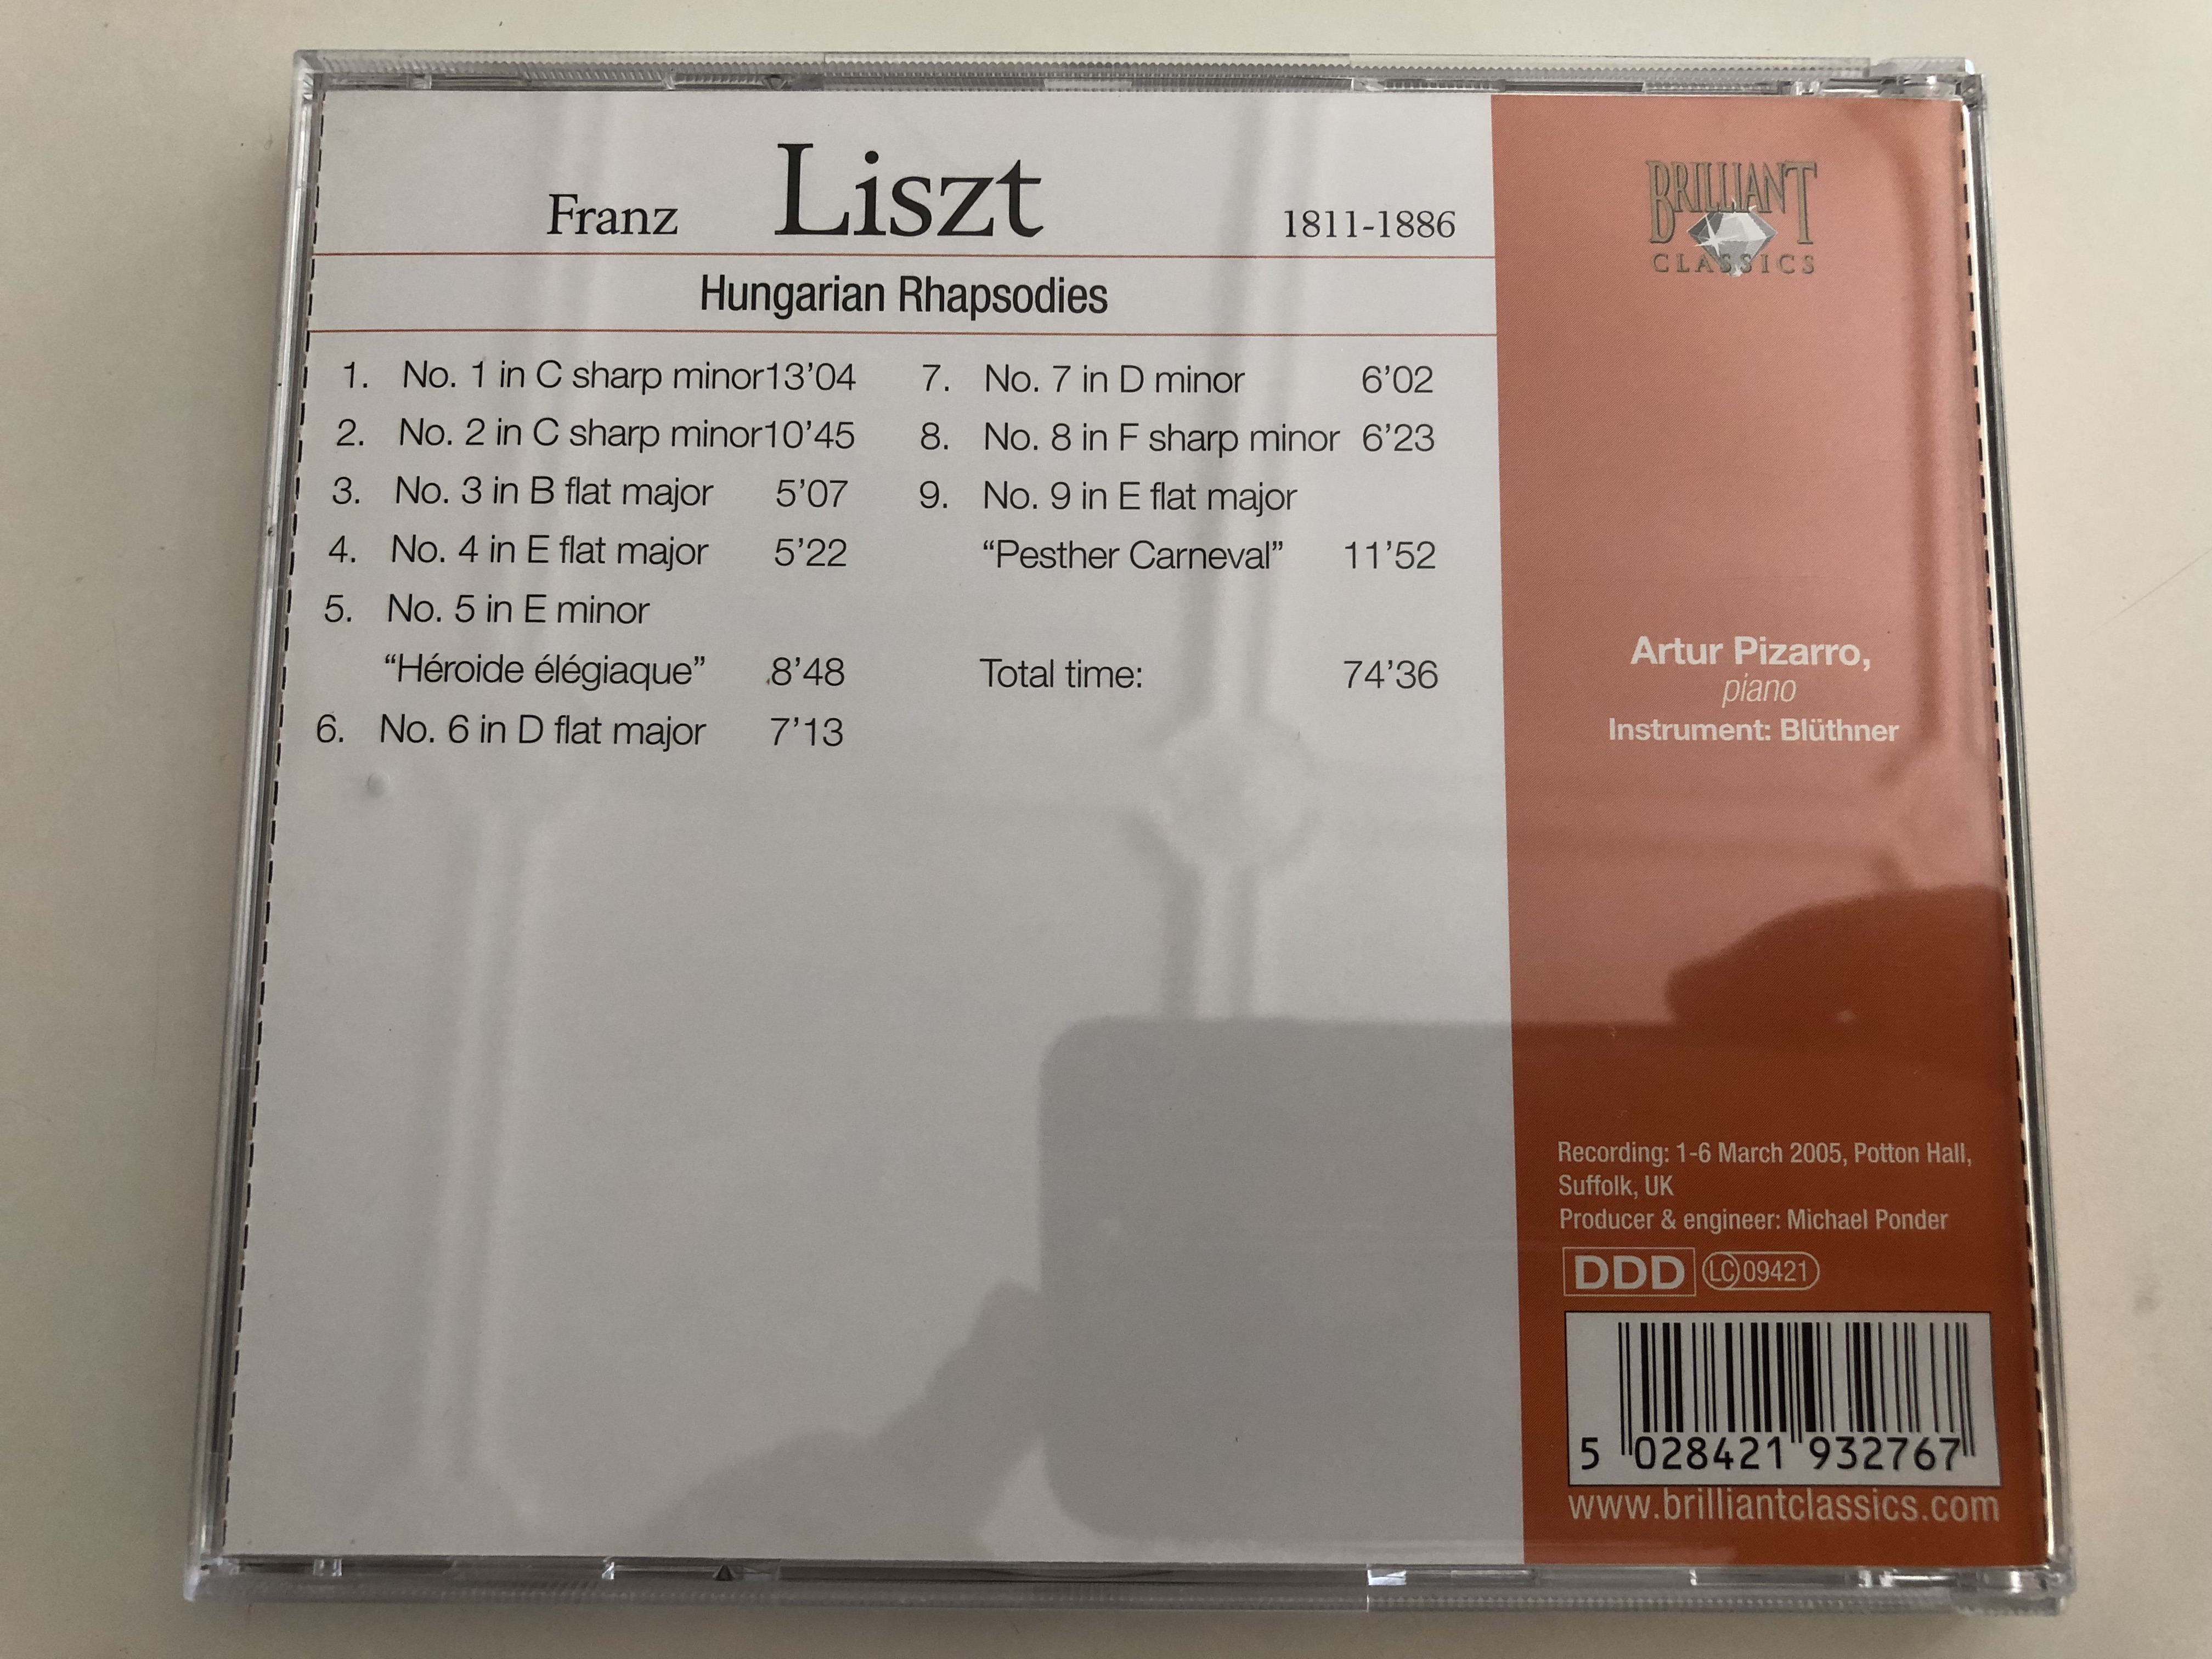 liszt-hungarian-rhapsodies-artur-pizzaro-piano-brilliant-classics-93276-audio-cd-2005-recorden-in-2005-in-potton-hall-suffolk-uk-5-.jpg